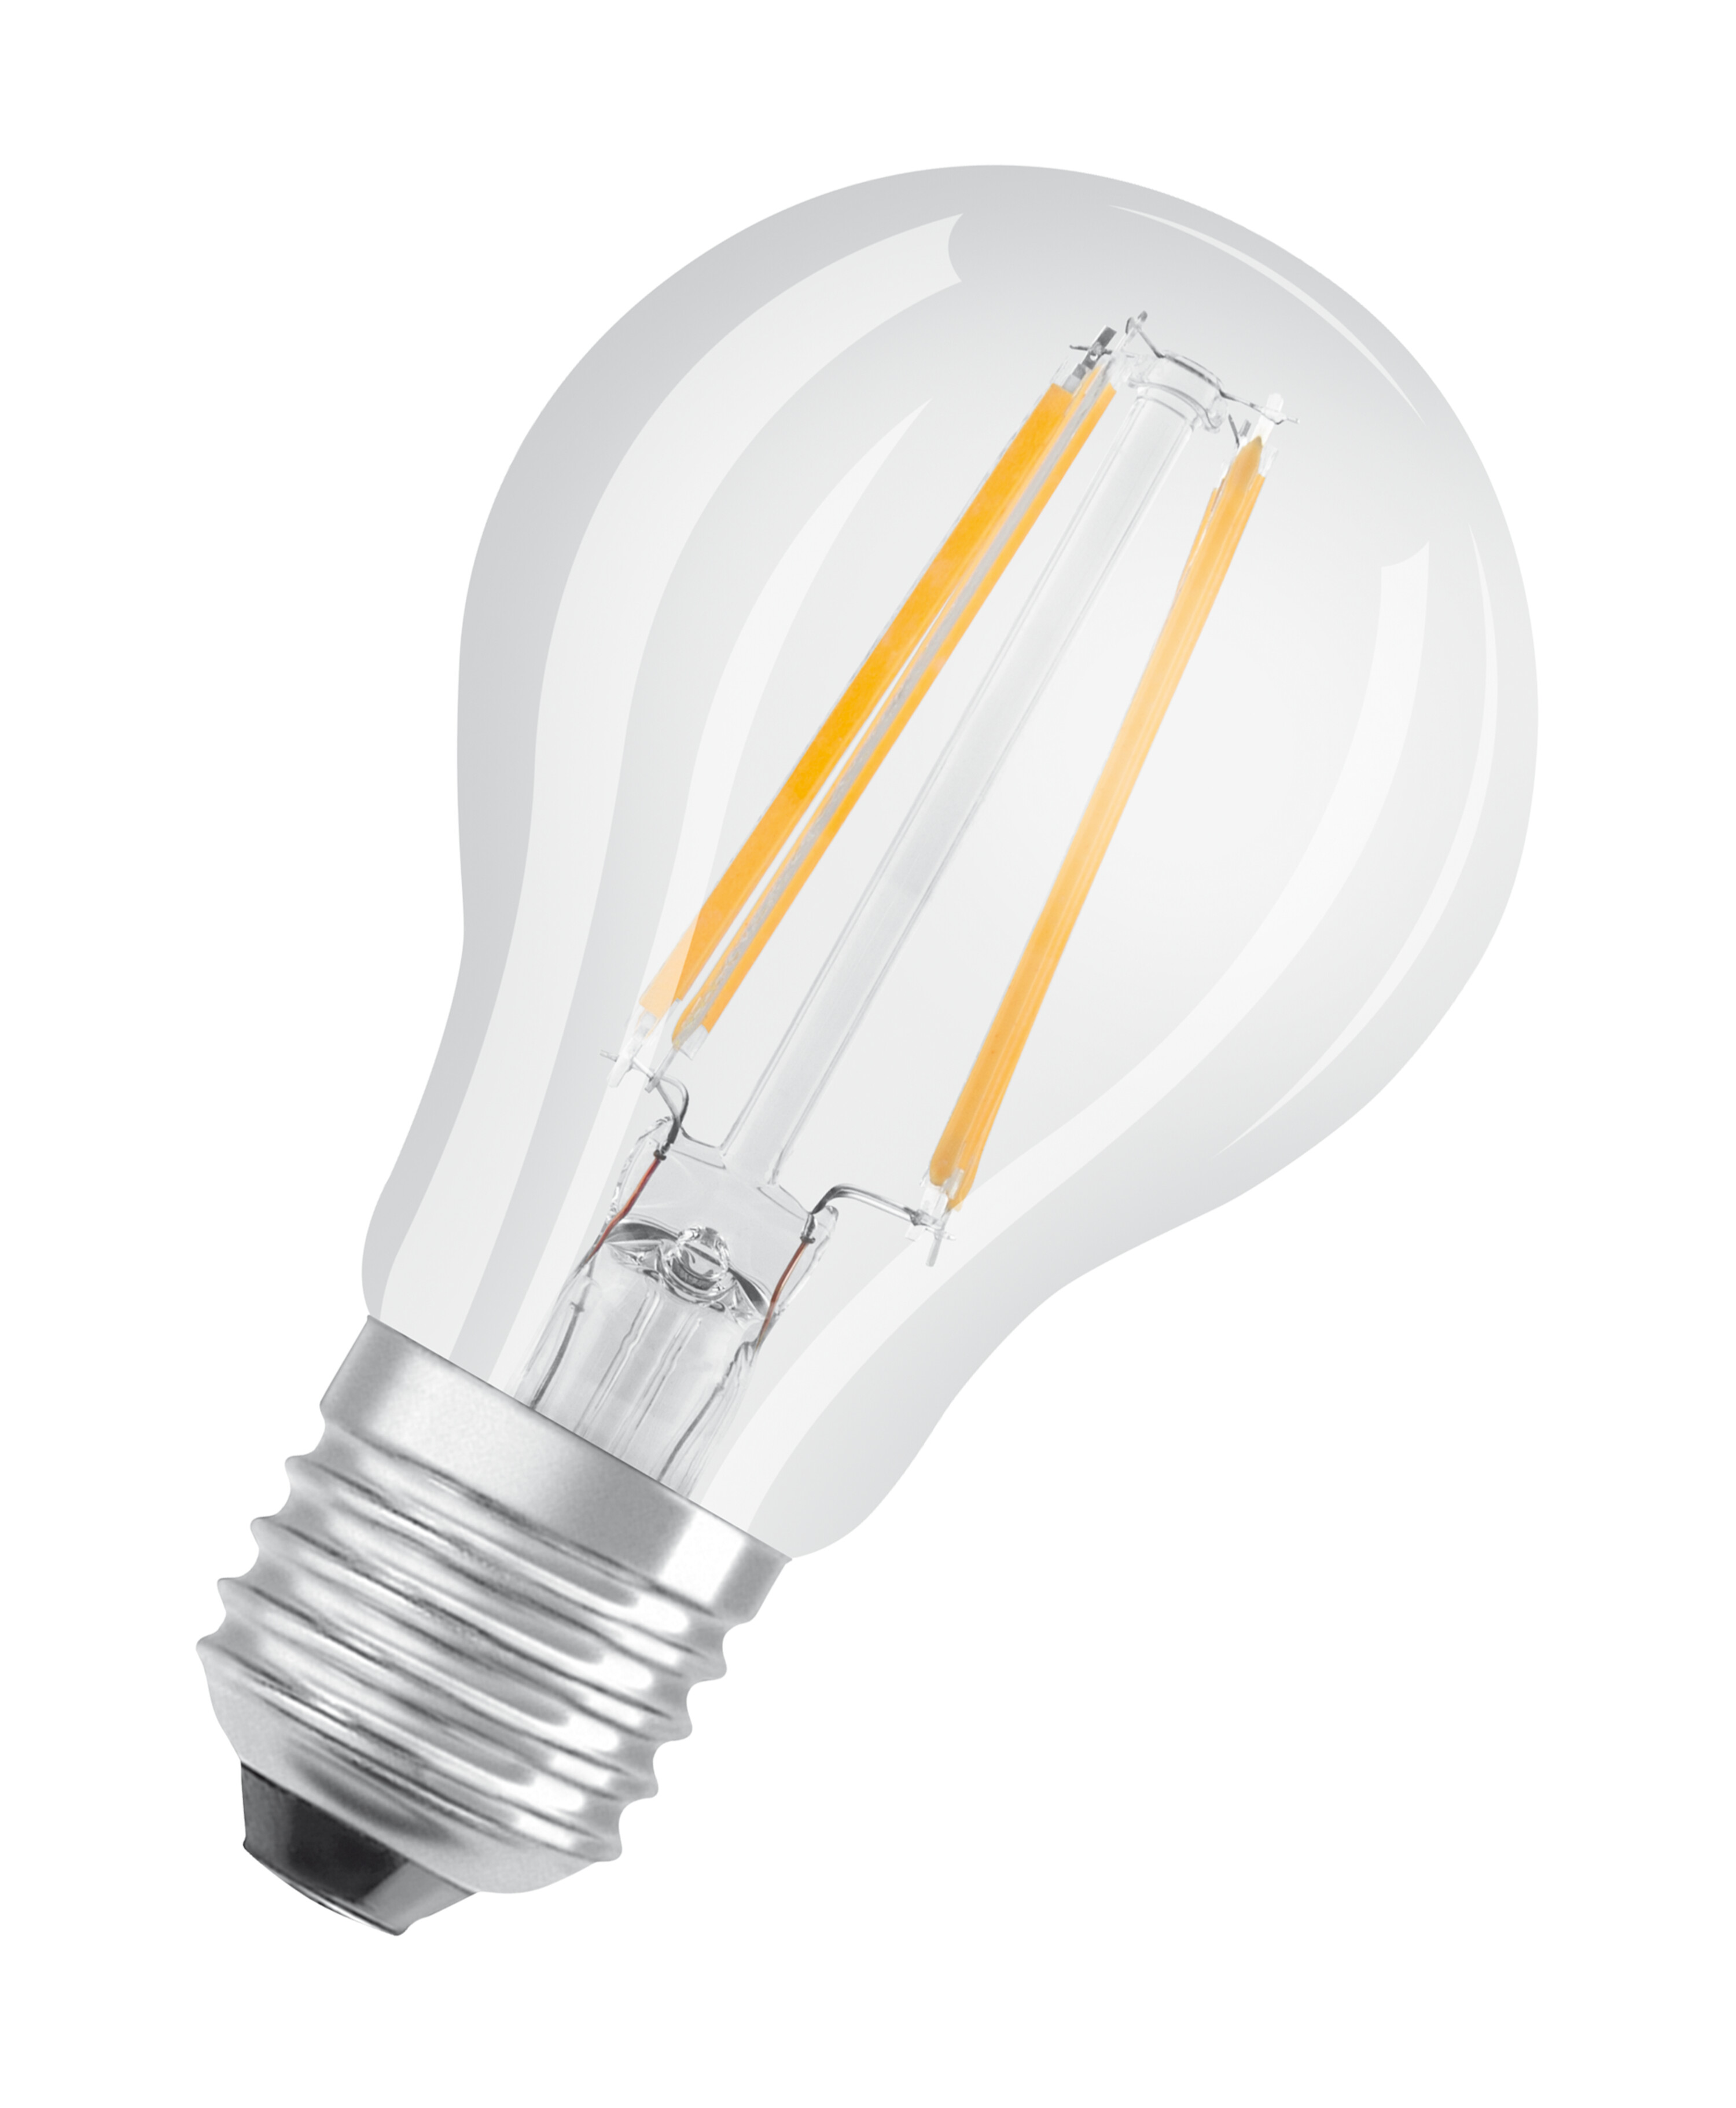 OSRAM  LED Retrofit CLASSIC Lumen LED 806 Lampe Kaltweiß A